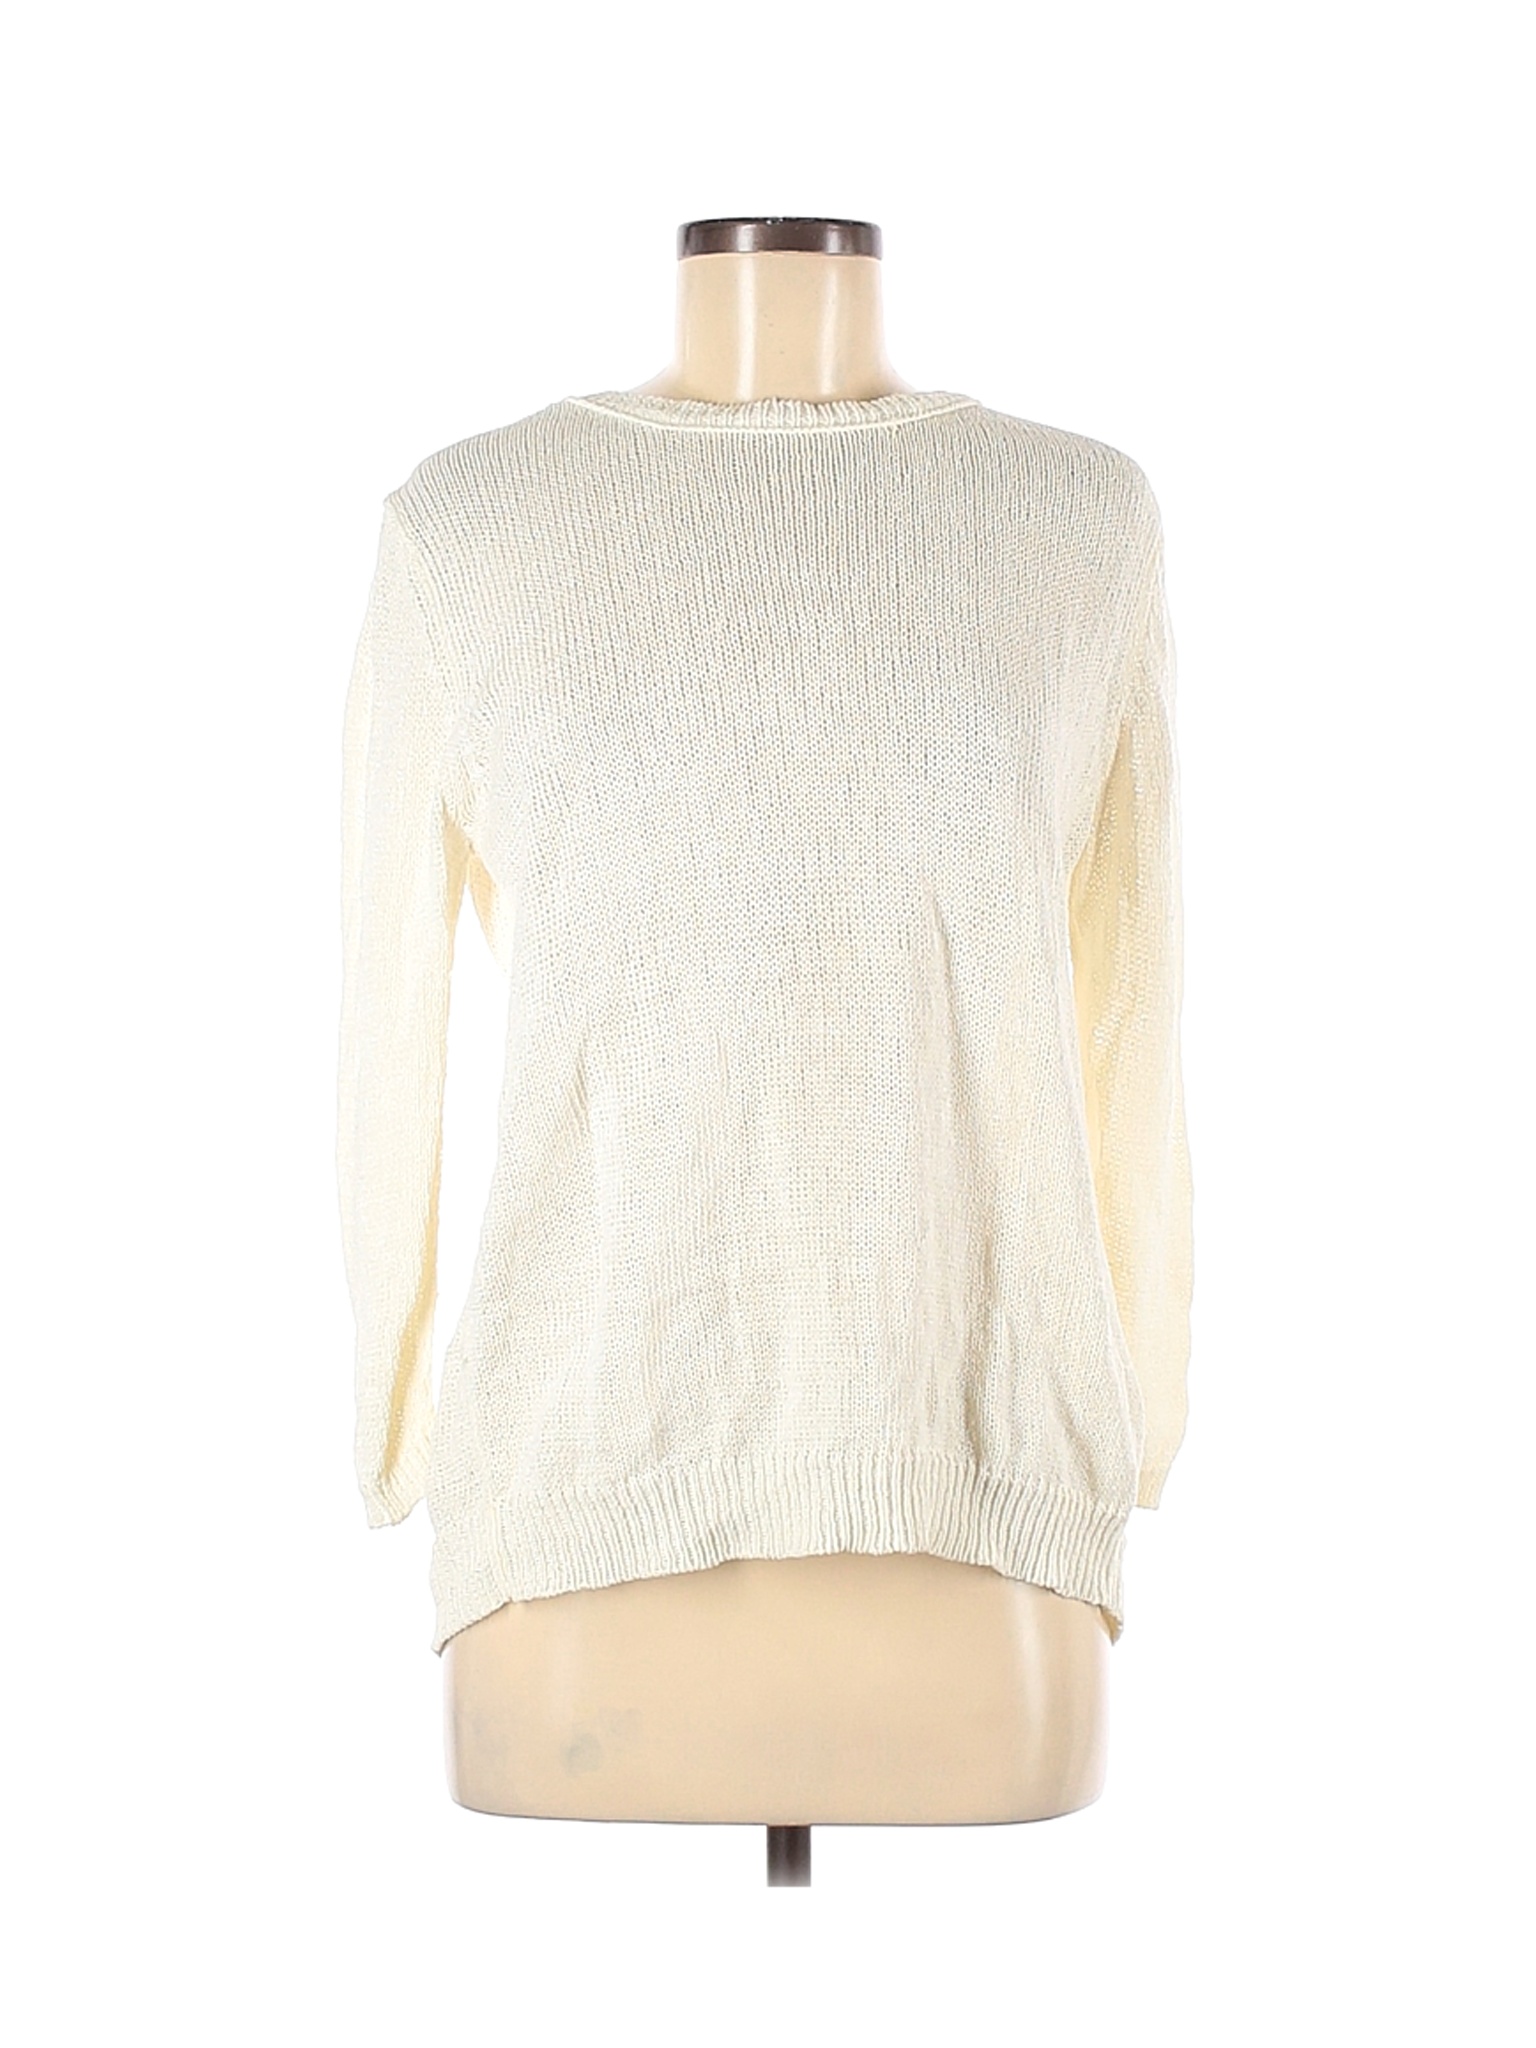 360 Sweater Women Ivory Pullover Sweater M | eBay